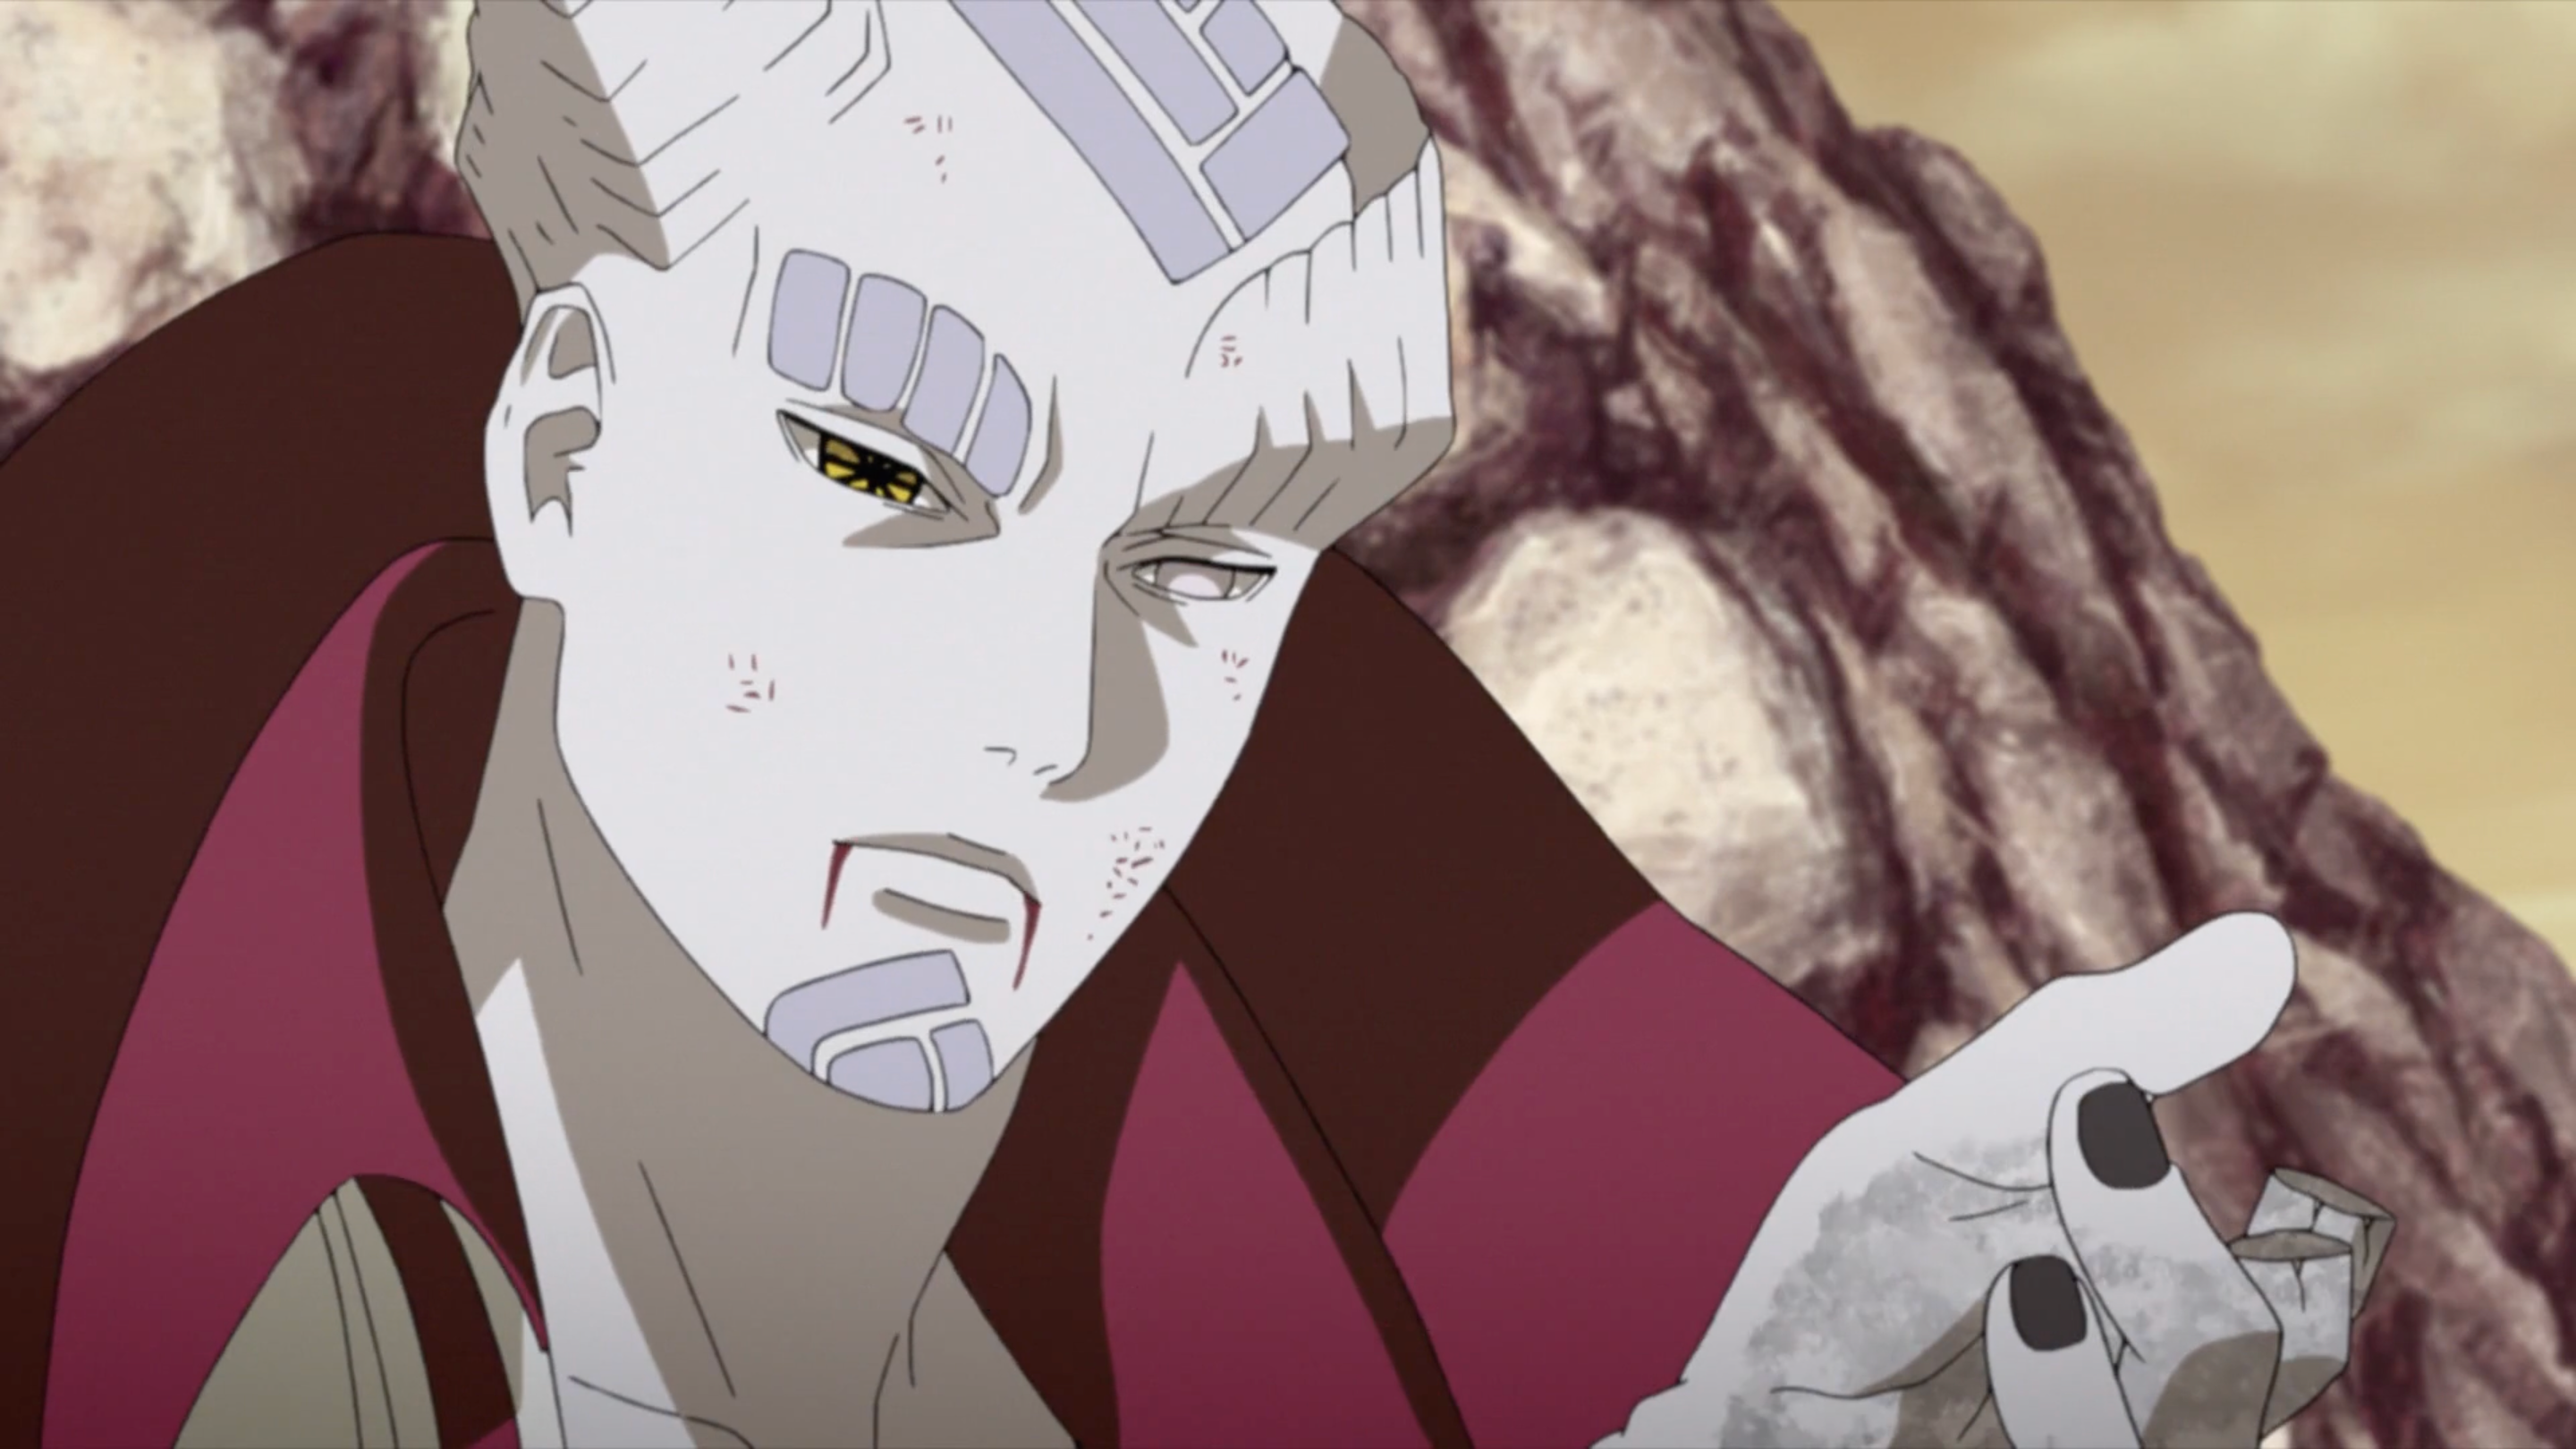 VIZ Media Acquires Rights To 'Boruto: Naruto Next Generations' Anime Series